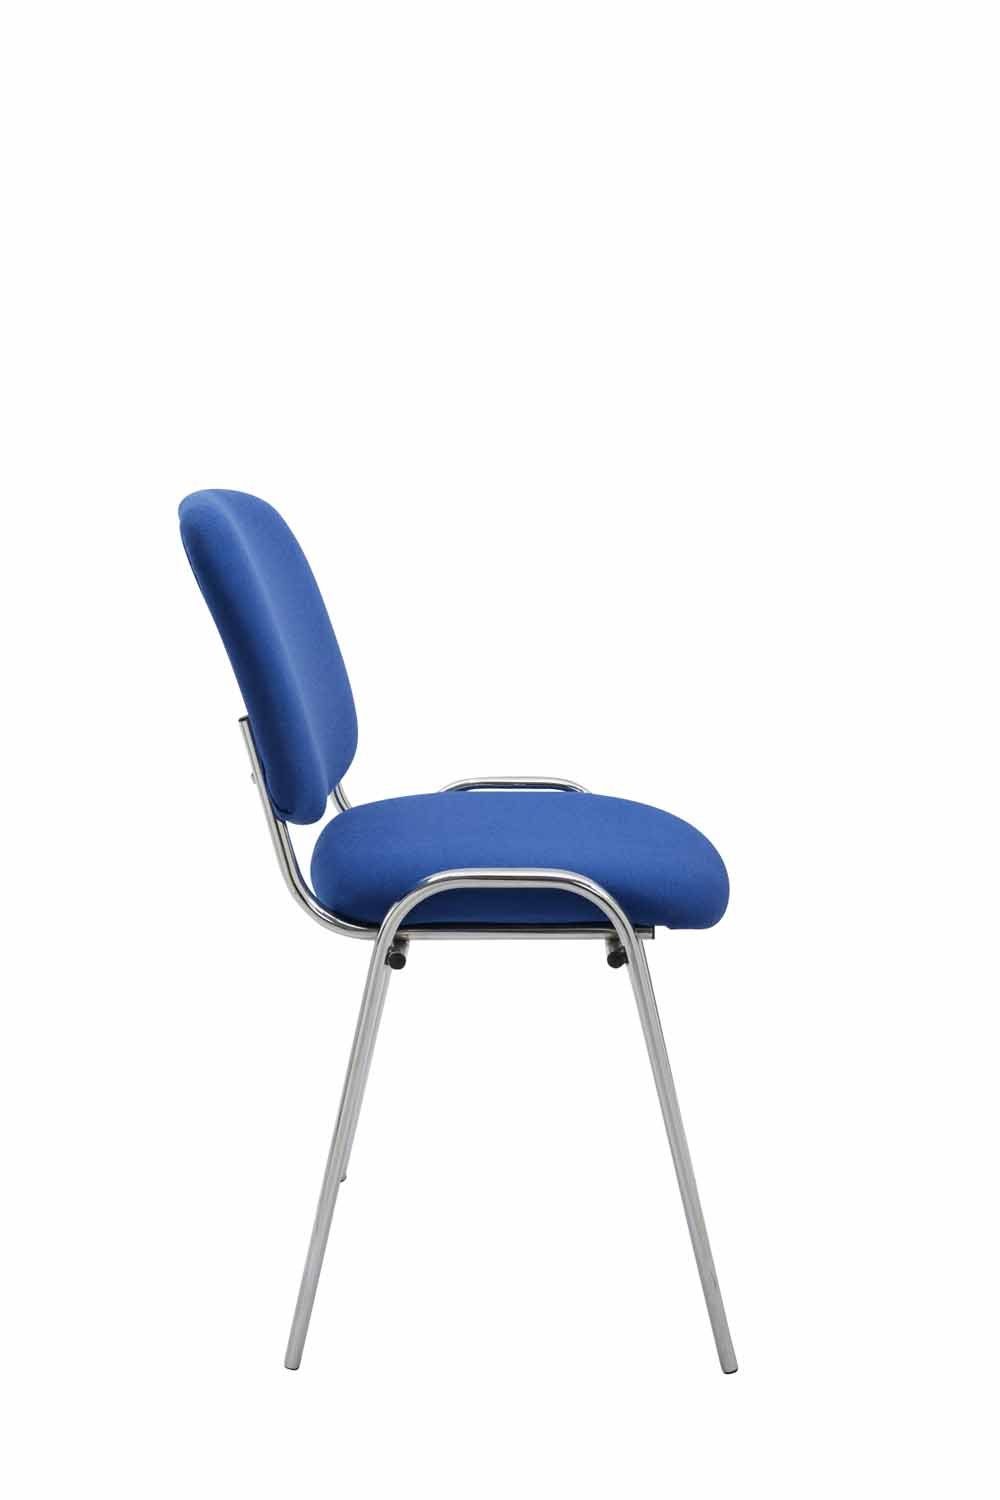 Keen Metall Stoff chrom hochwertiger Polsterung blau mit Konferenzstuhl TPFLiving Messestuhl), Besucherstuhl - - - - Gestell: Warteraumstuhl (Besprechungsstuhl Sitzfläche: